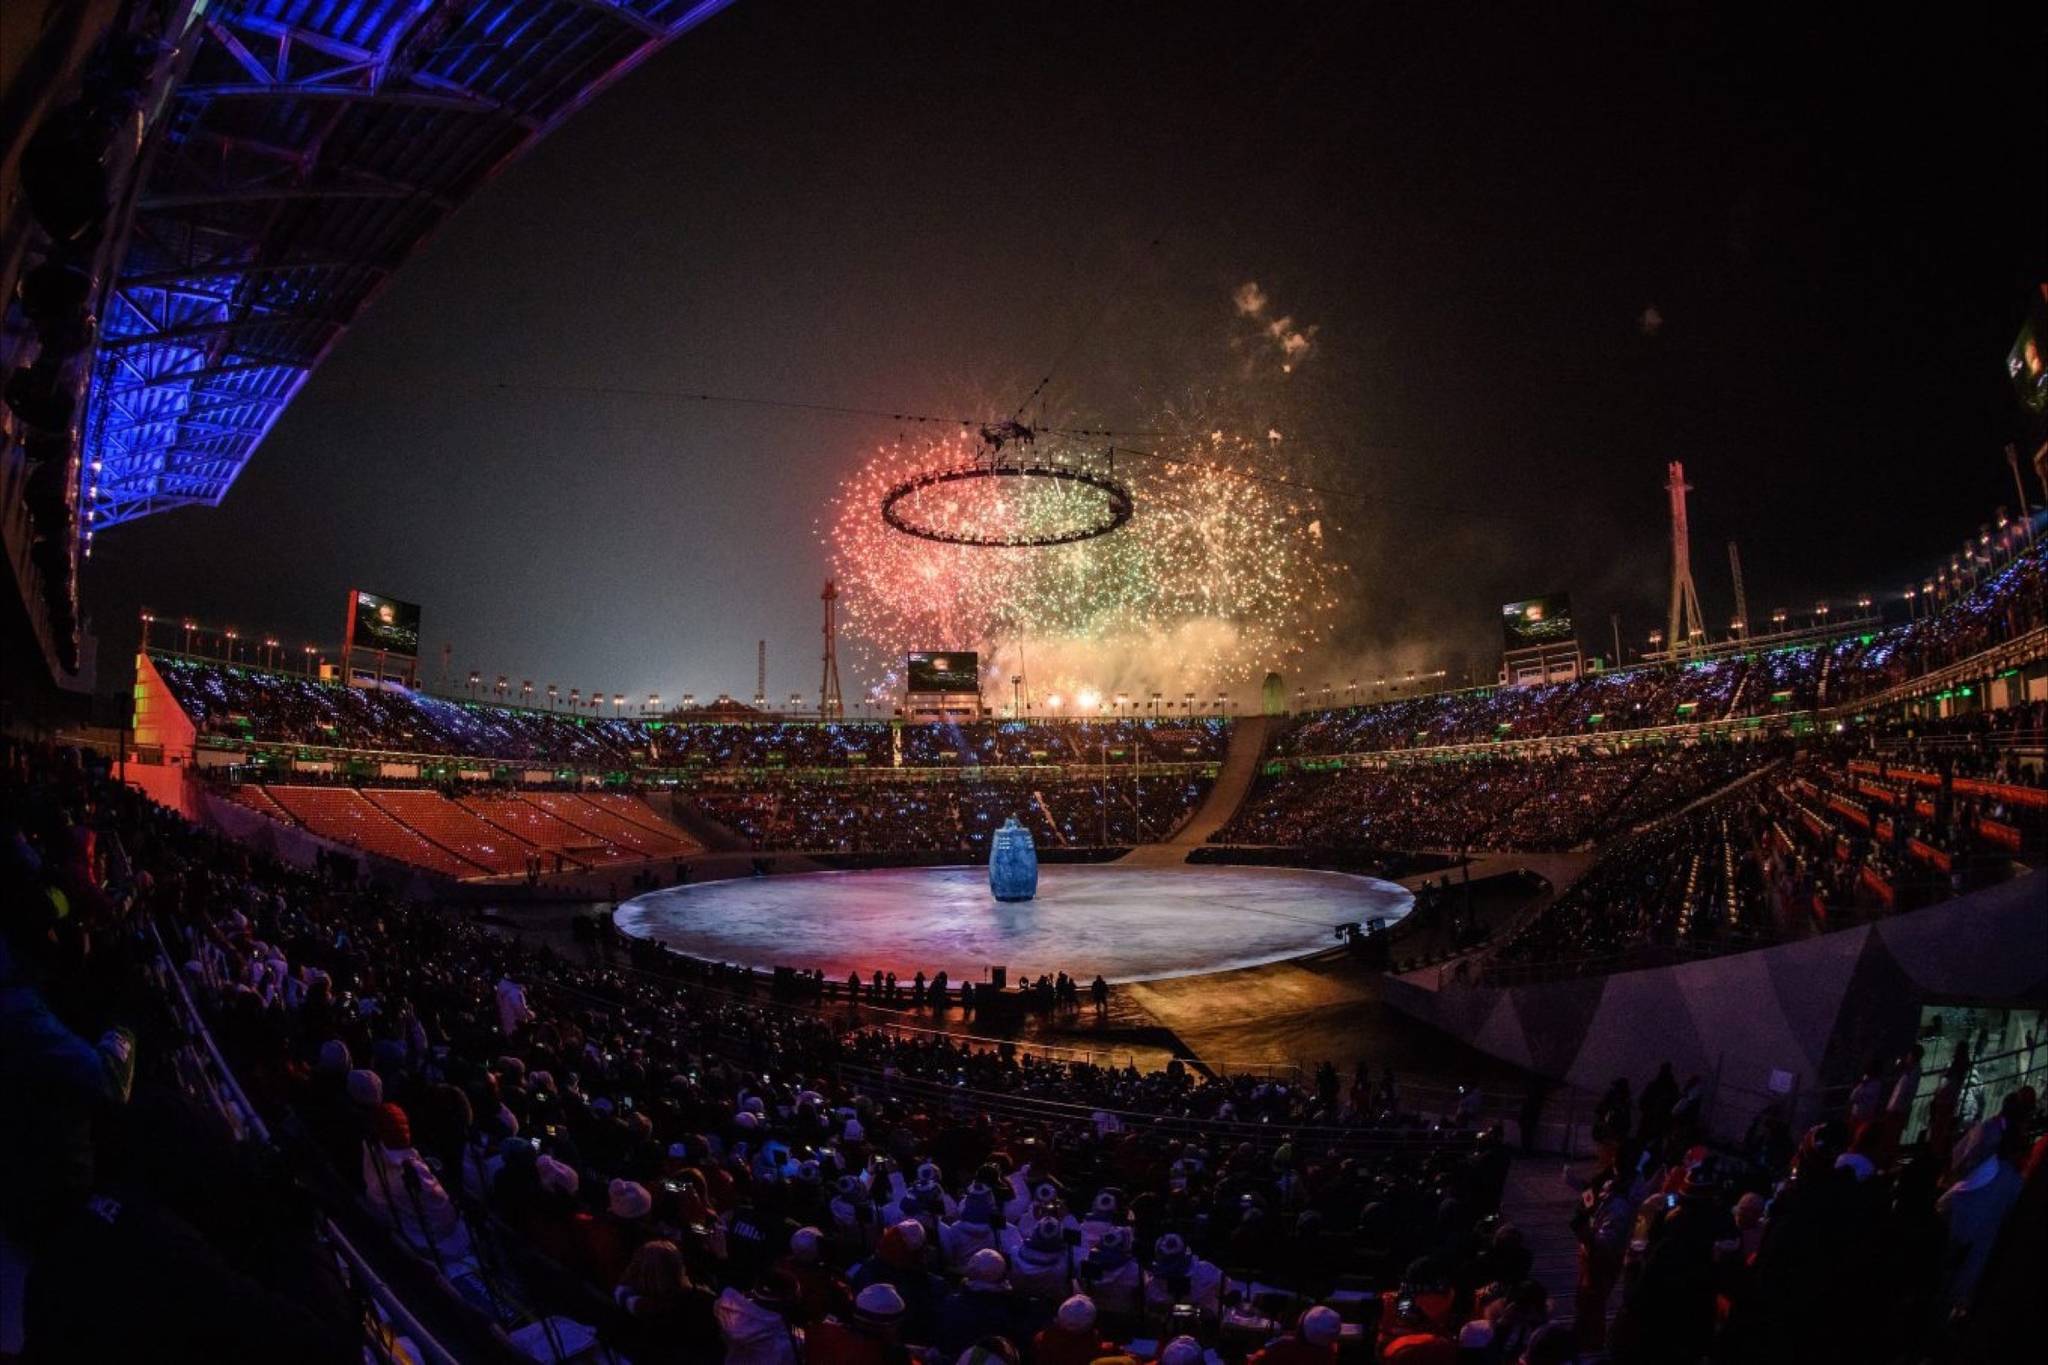 PHOTOS: Memorable moments at PyeongChang 2018 opening ceremonies